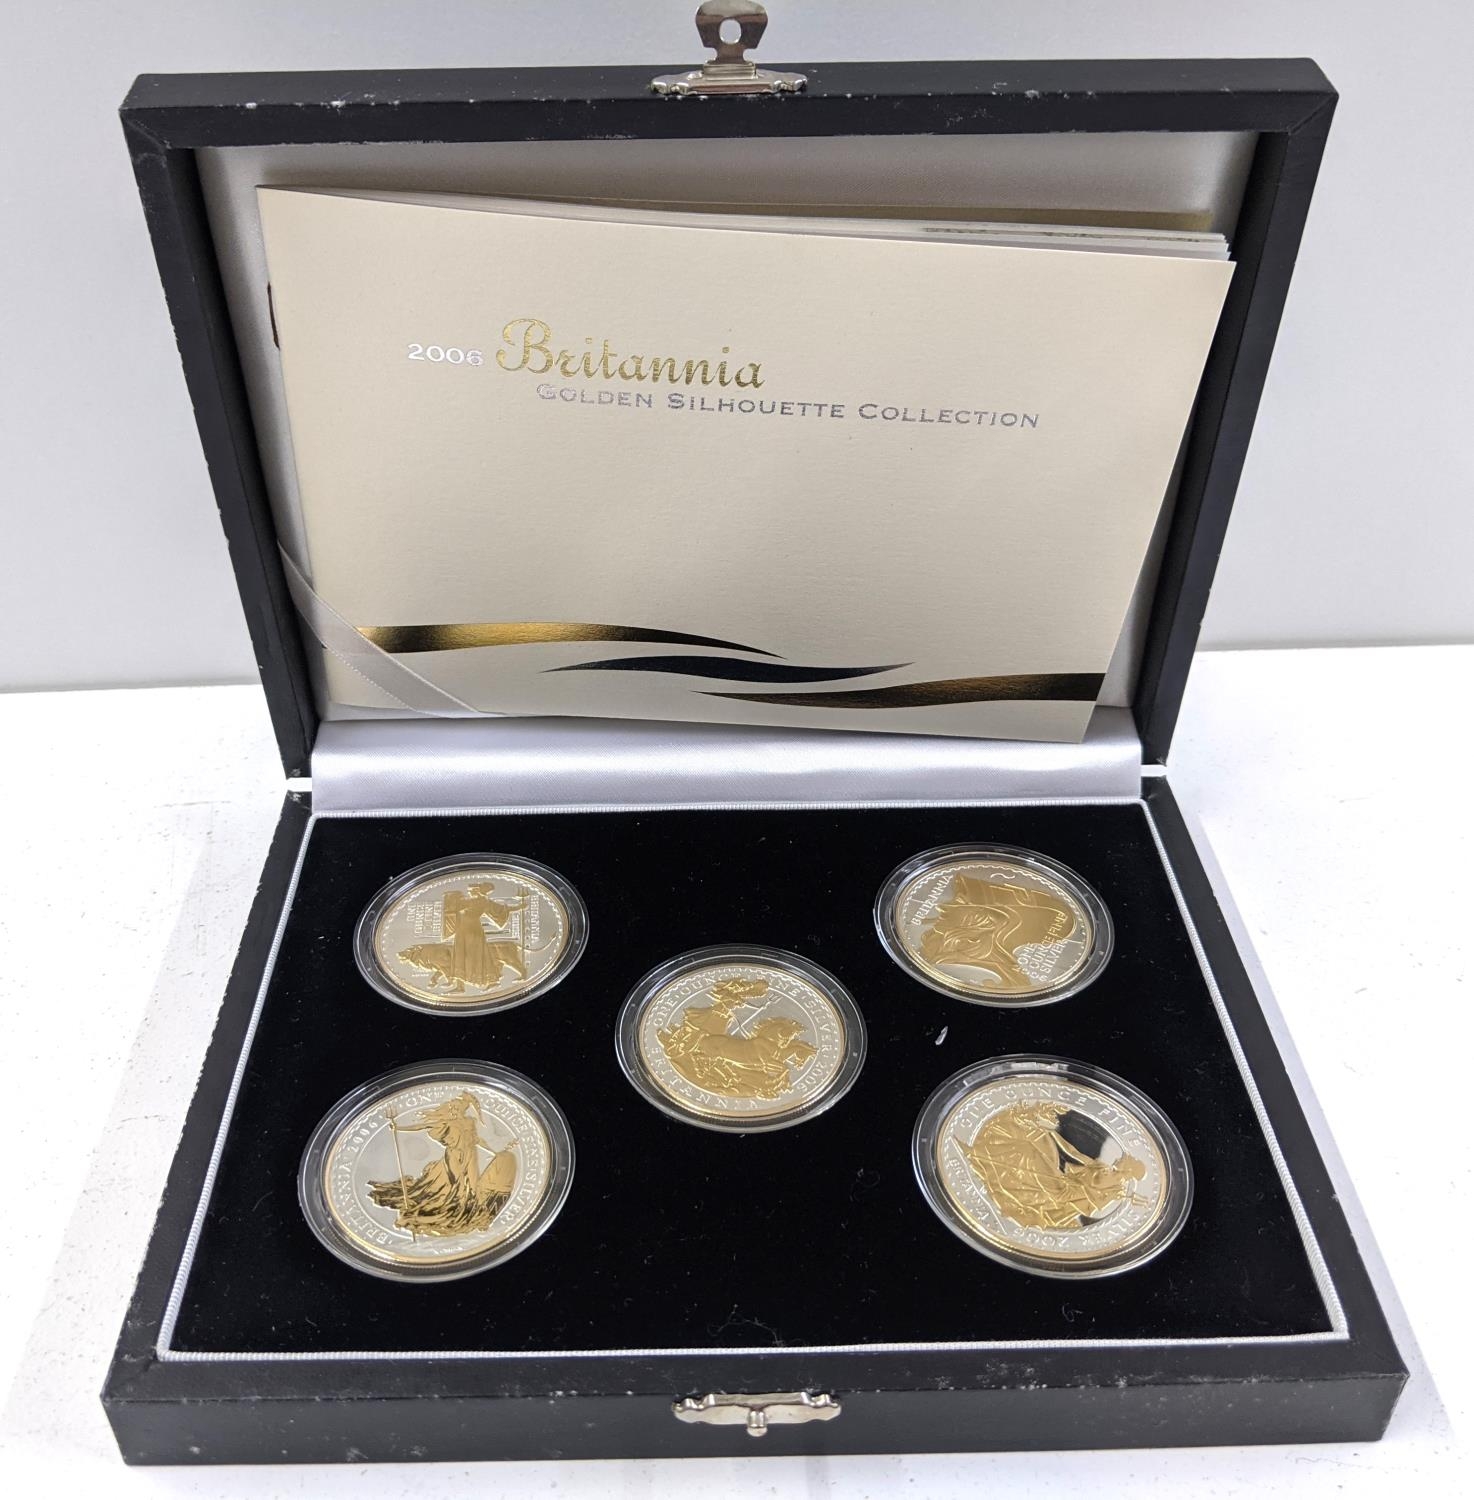 United Kingdom - Elizabeth II (1952-2022), Royal Mint '2006 Britannia Golden Silhouette Collection',